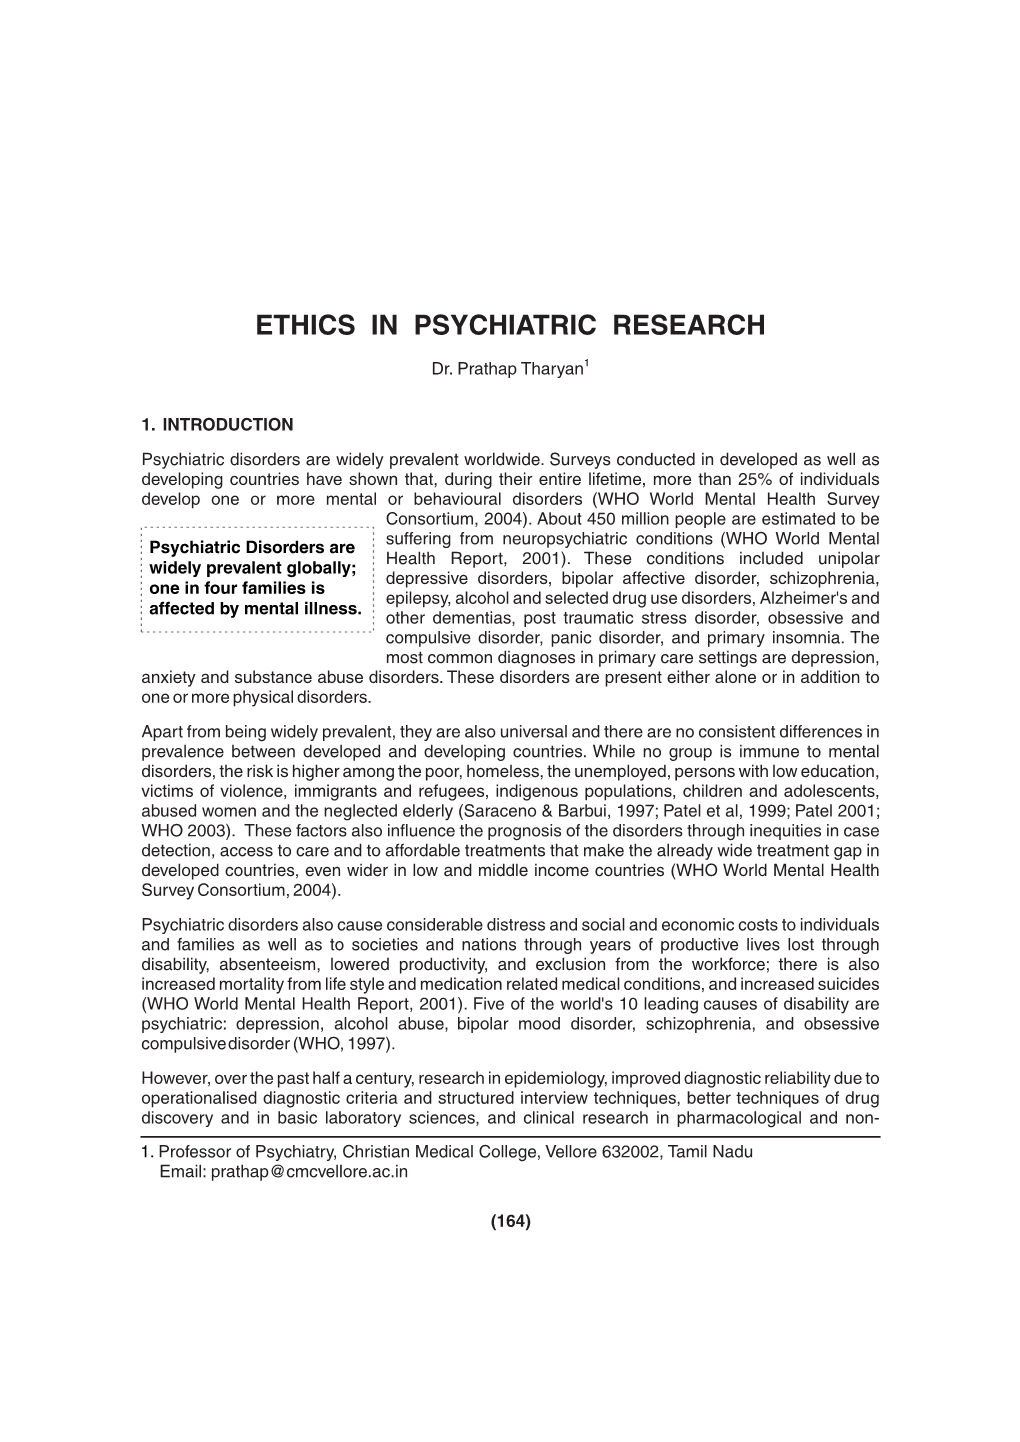 Ethics in Psychiatric Reserach